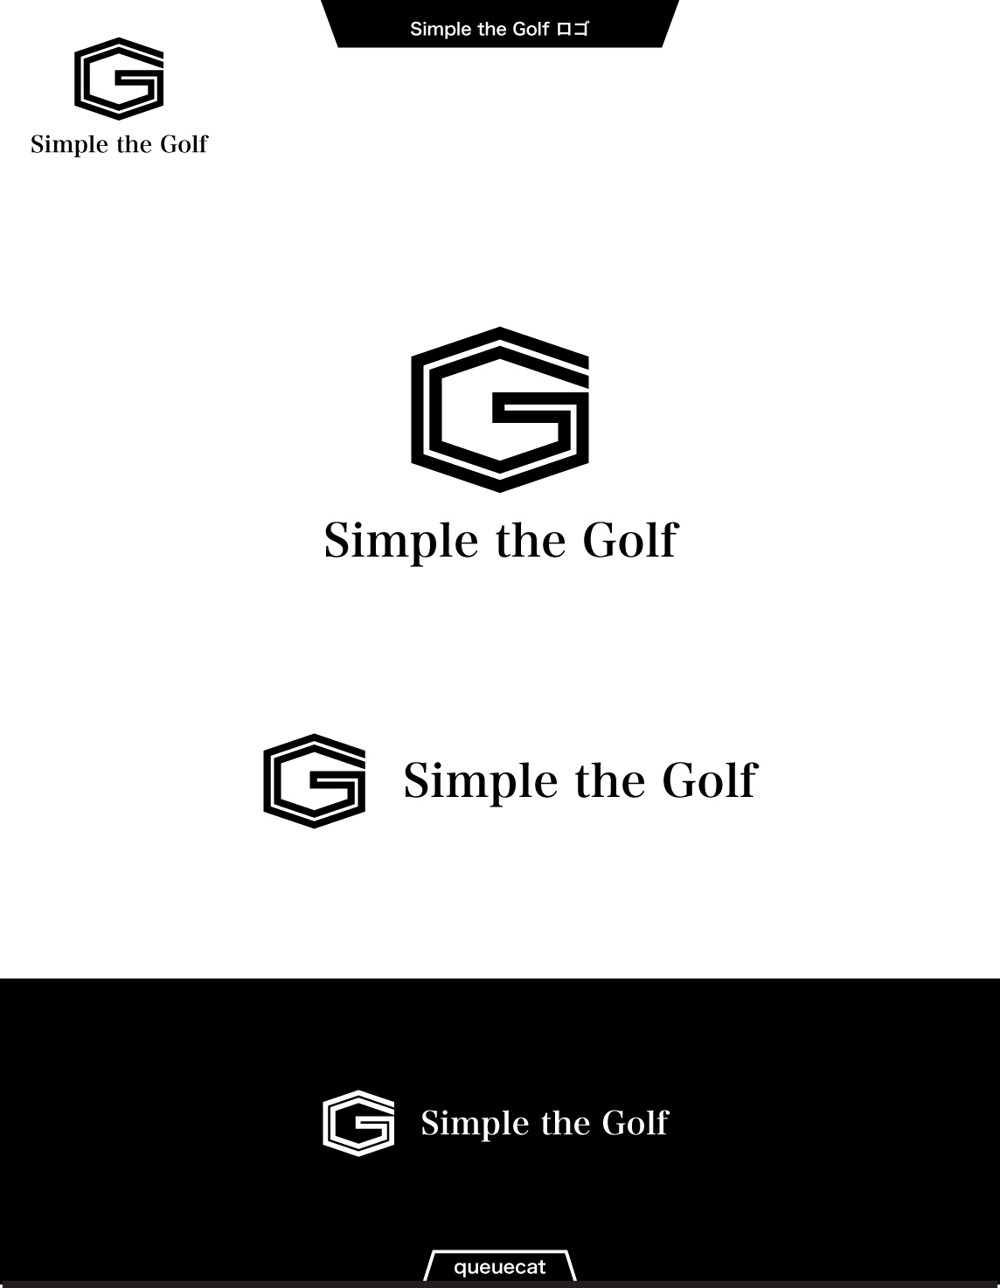 Simple the Golf2_1.jpg